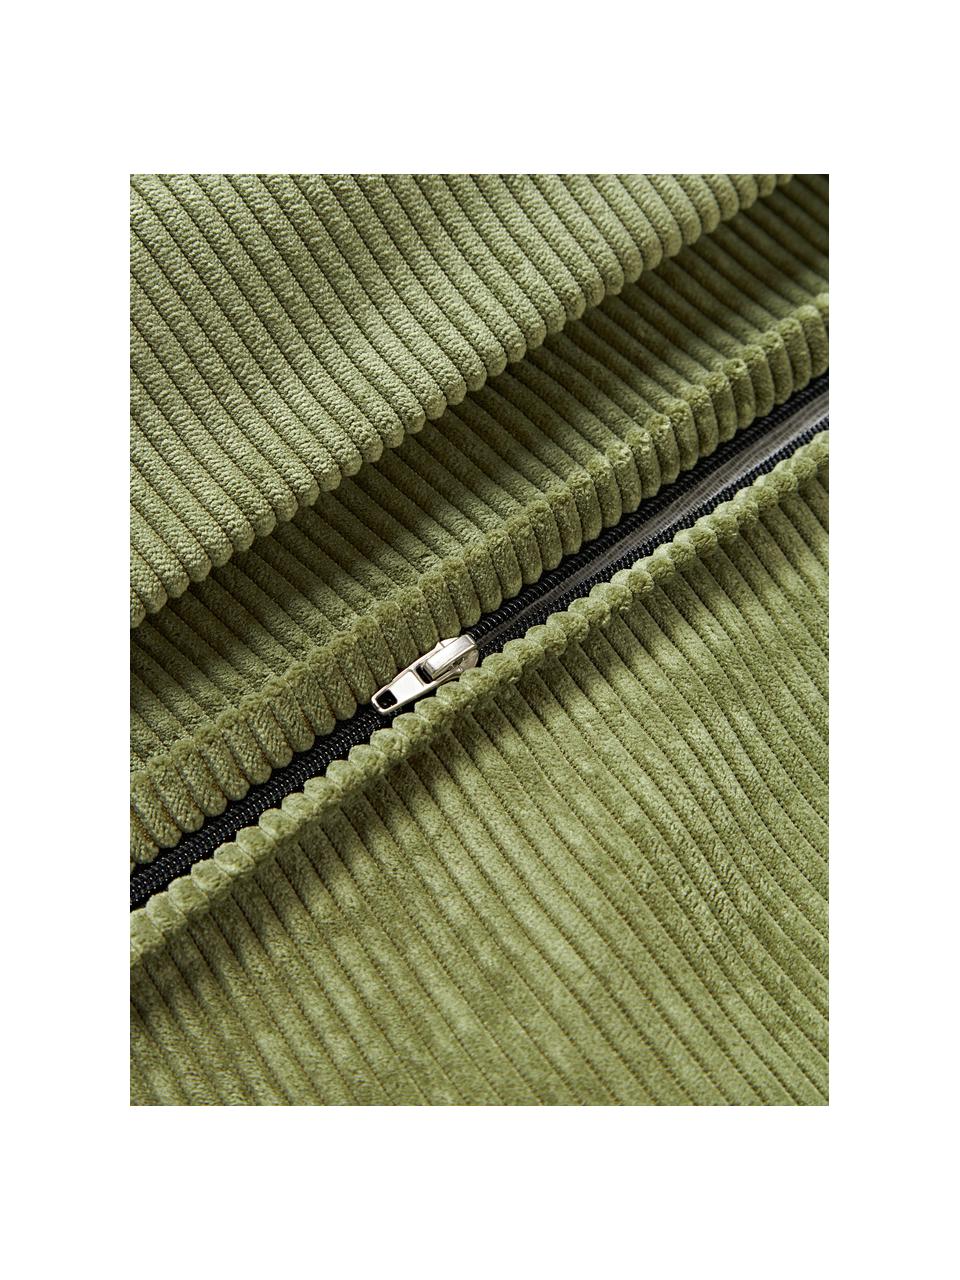 Cord-Sofa-Kissen Lennon, Hülle: Cord (92 % Polyester, 8 %, Cord Olivgrün, B 50 x L 80 cm